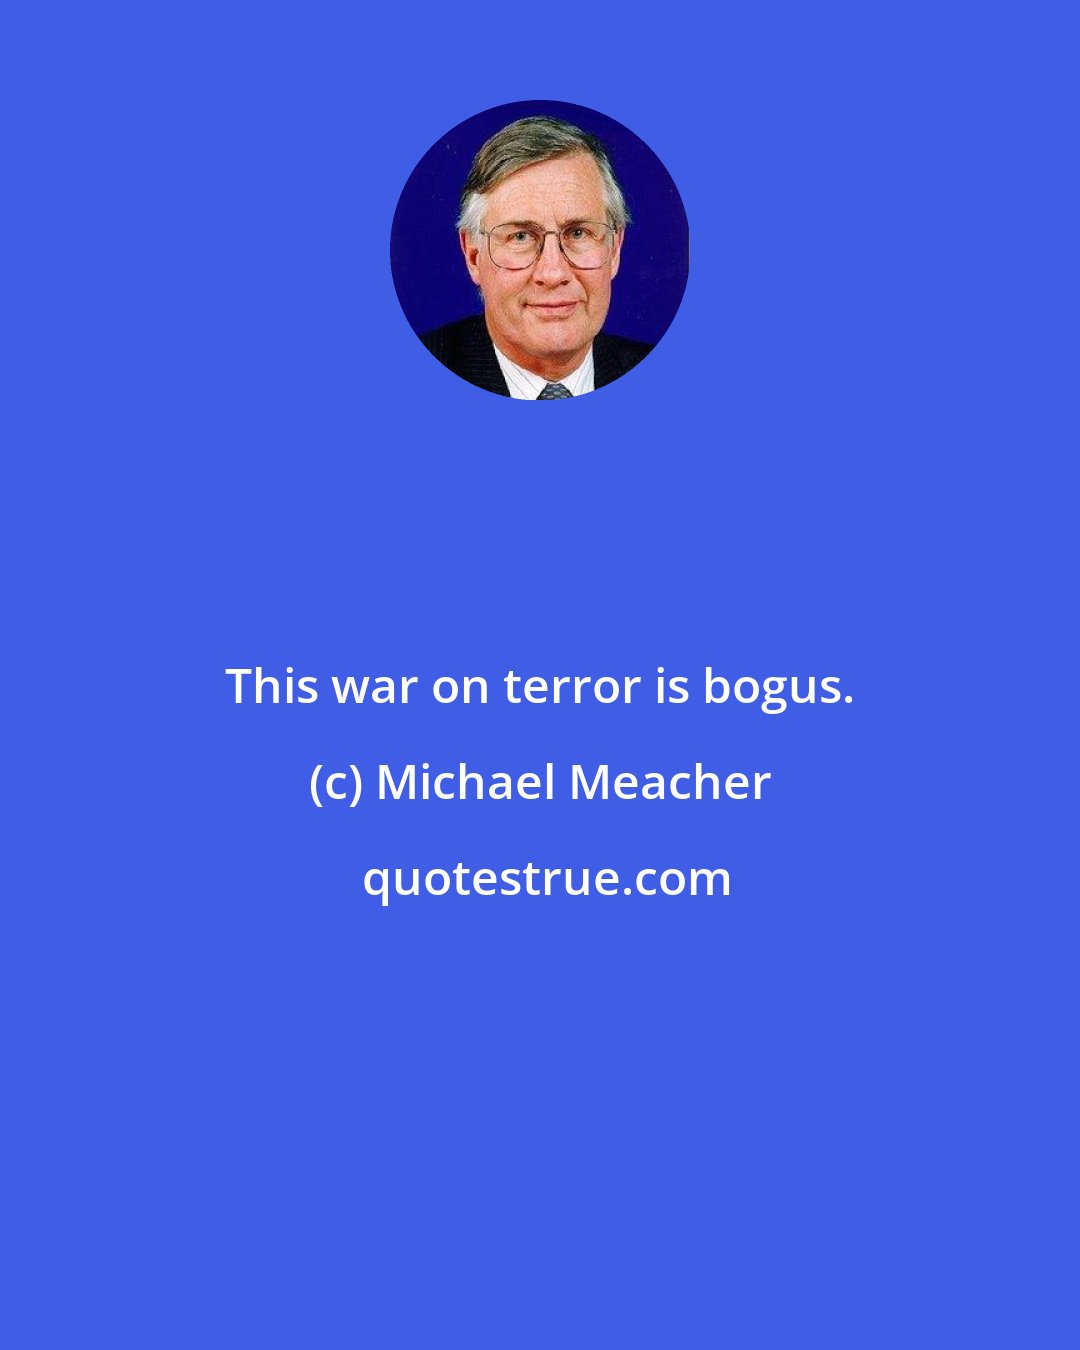 Michael Meacher: This war on terror is bogus.